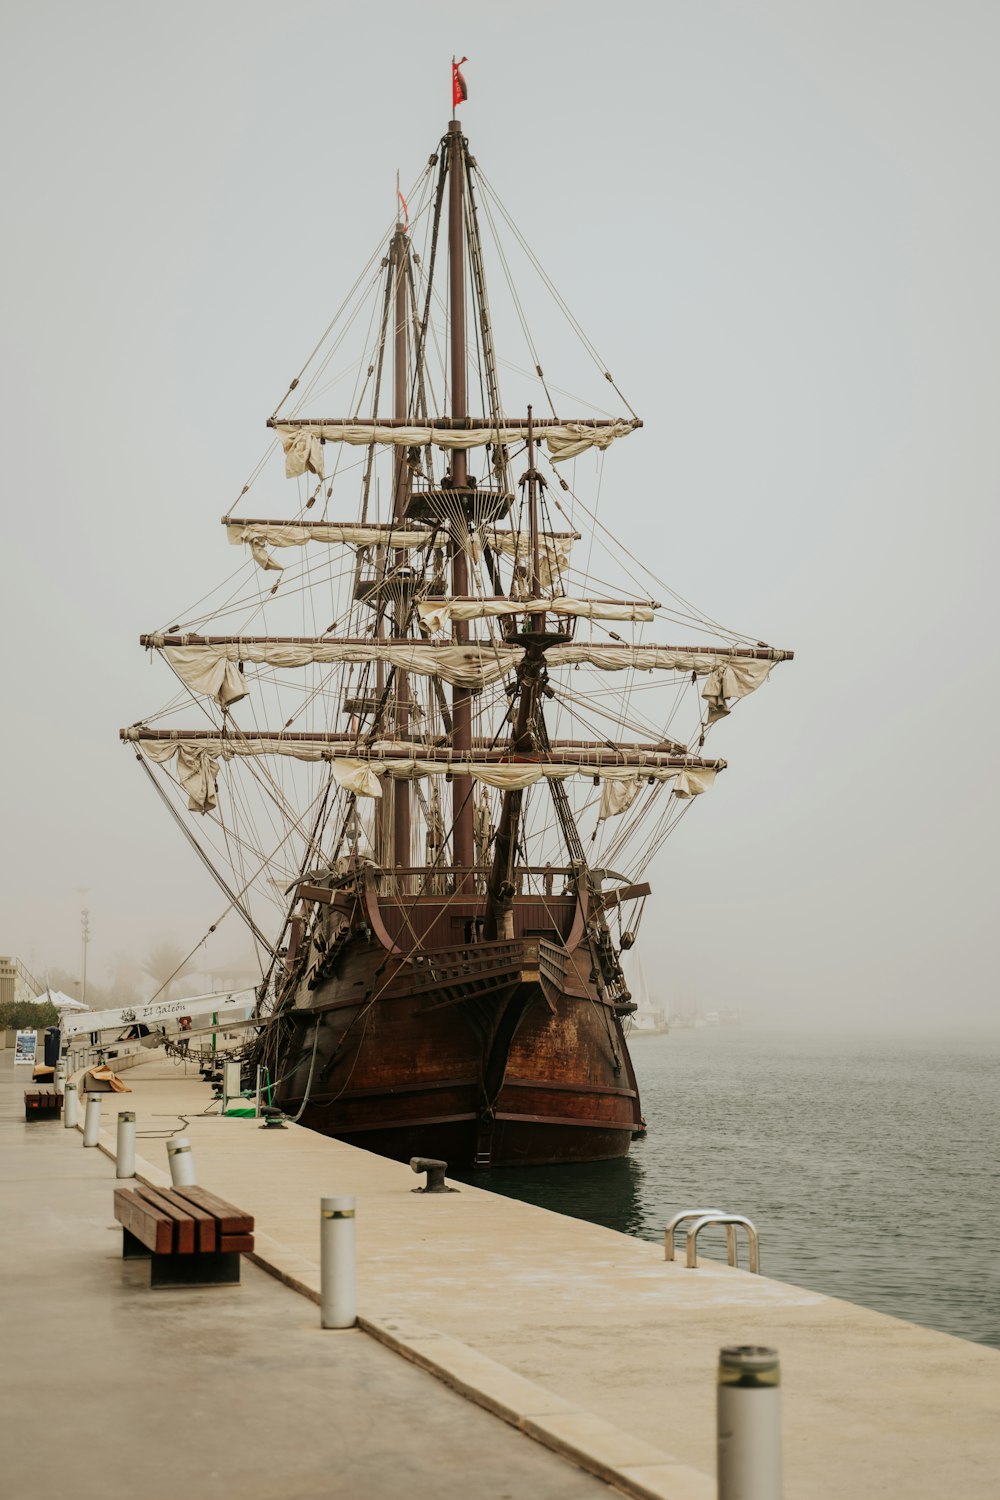 brown ship on sea during daytime